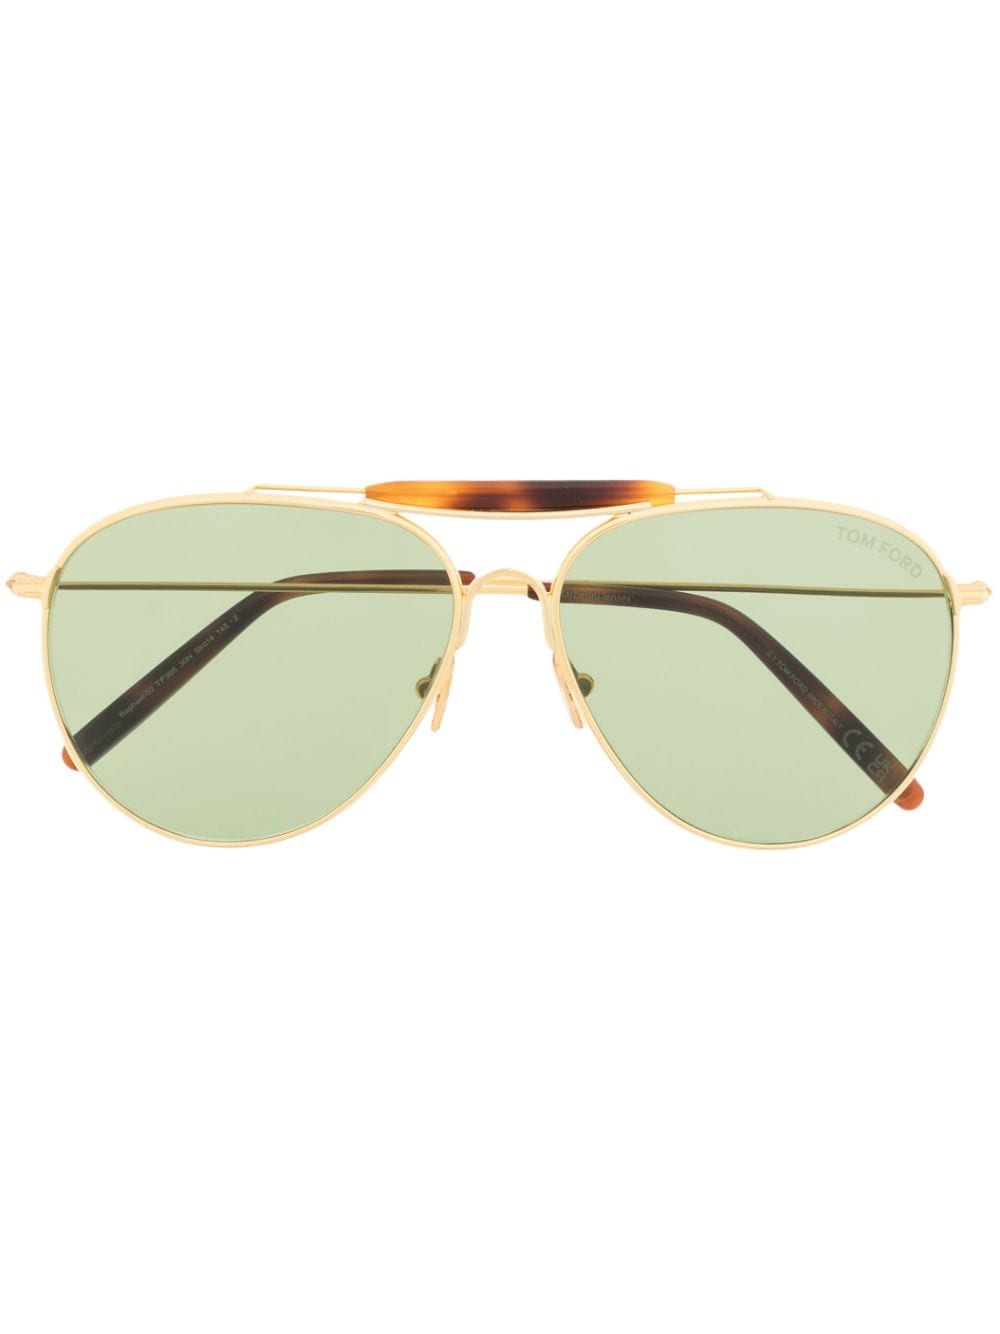 Tom Ford Raphael-02 TF995/S 32F Sunglasses - Pretavoir